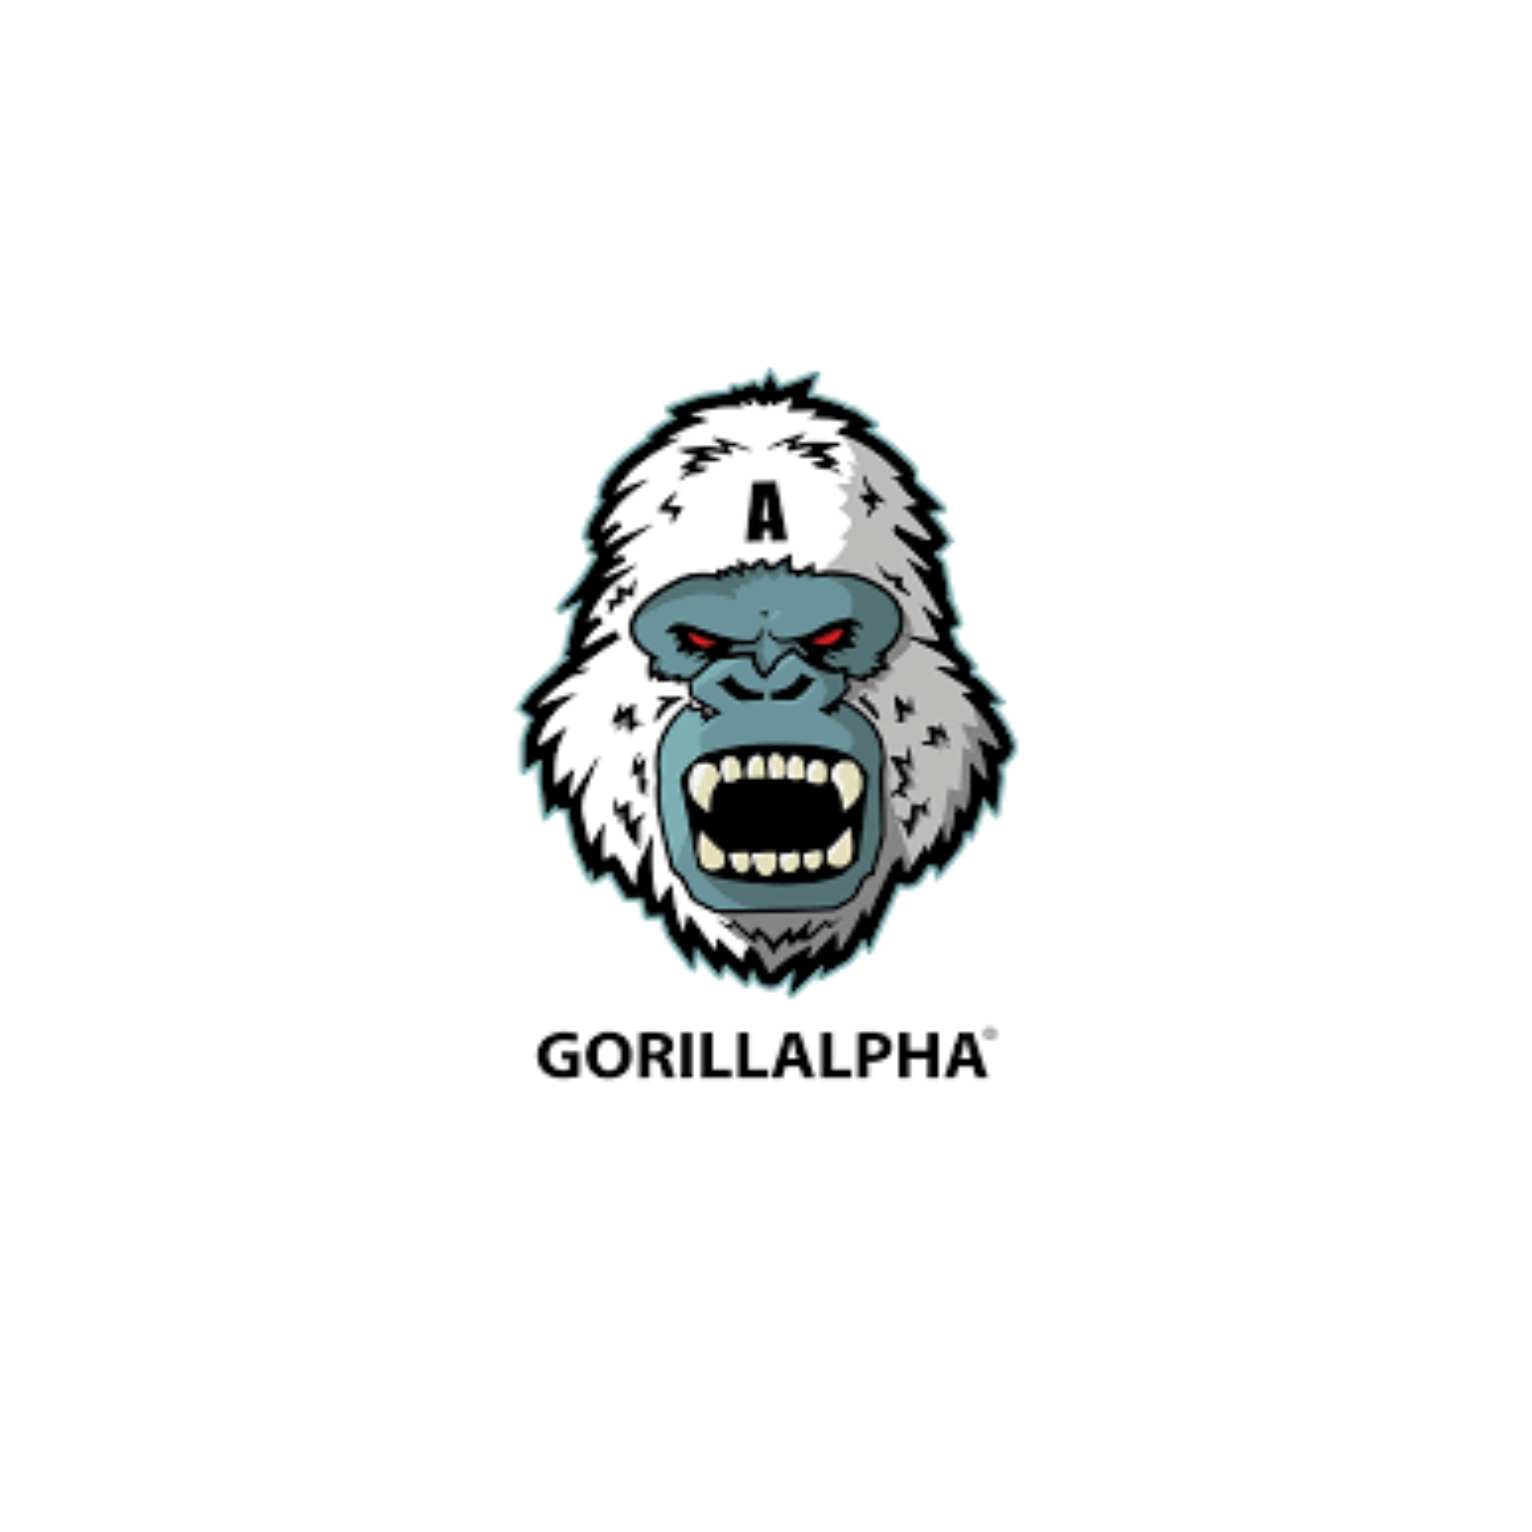 Gorillalpha - Nutriland